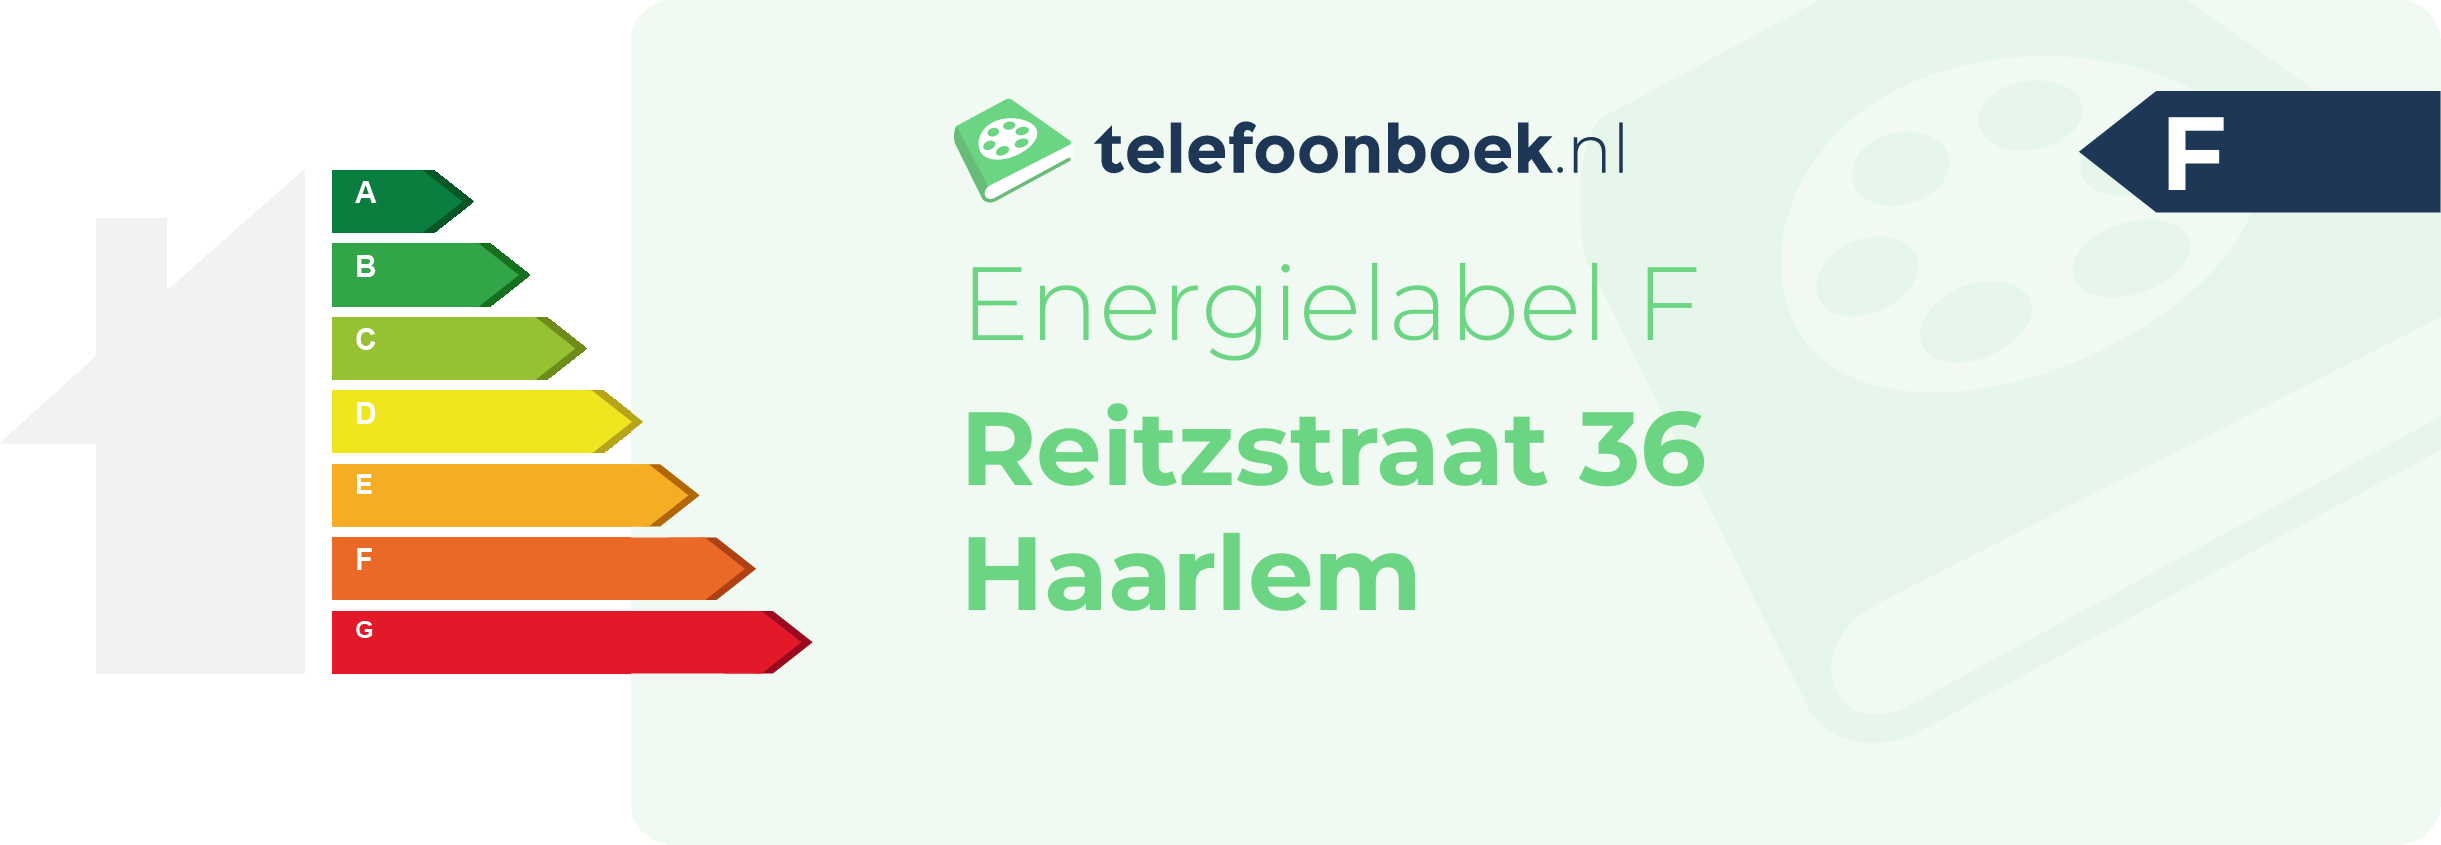 Energielabel Reitzstraat 36 Haarlem